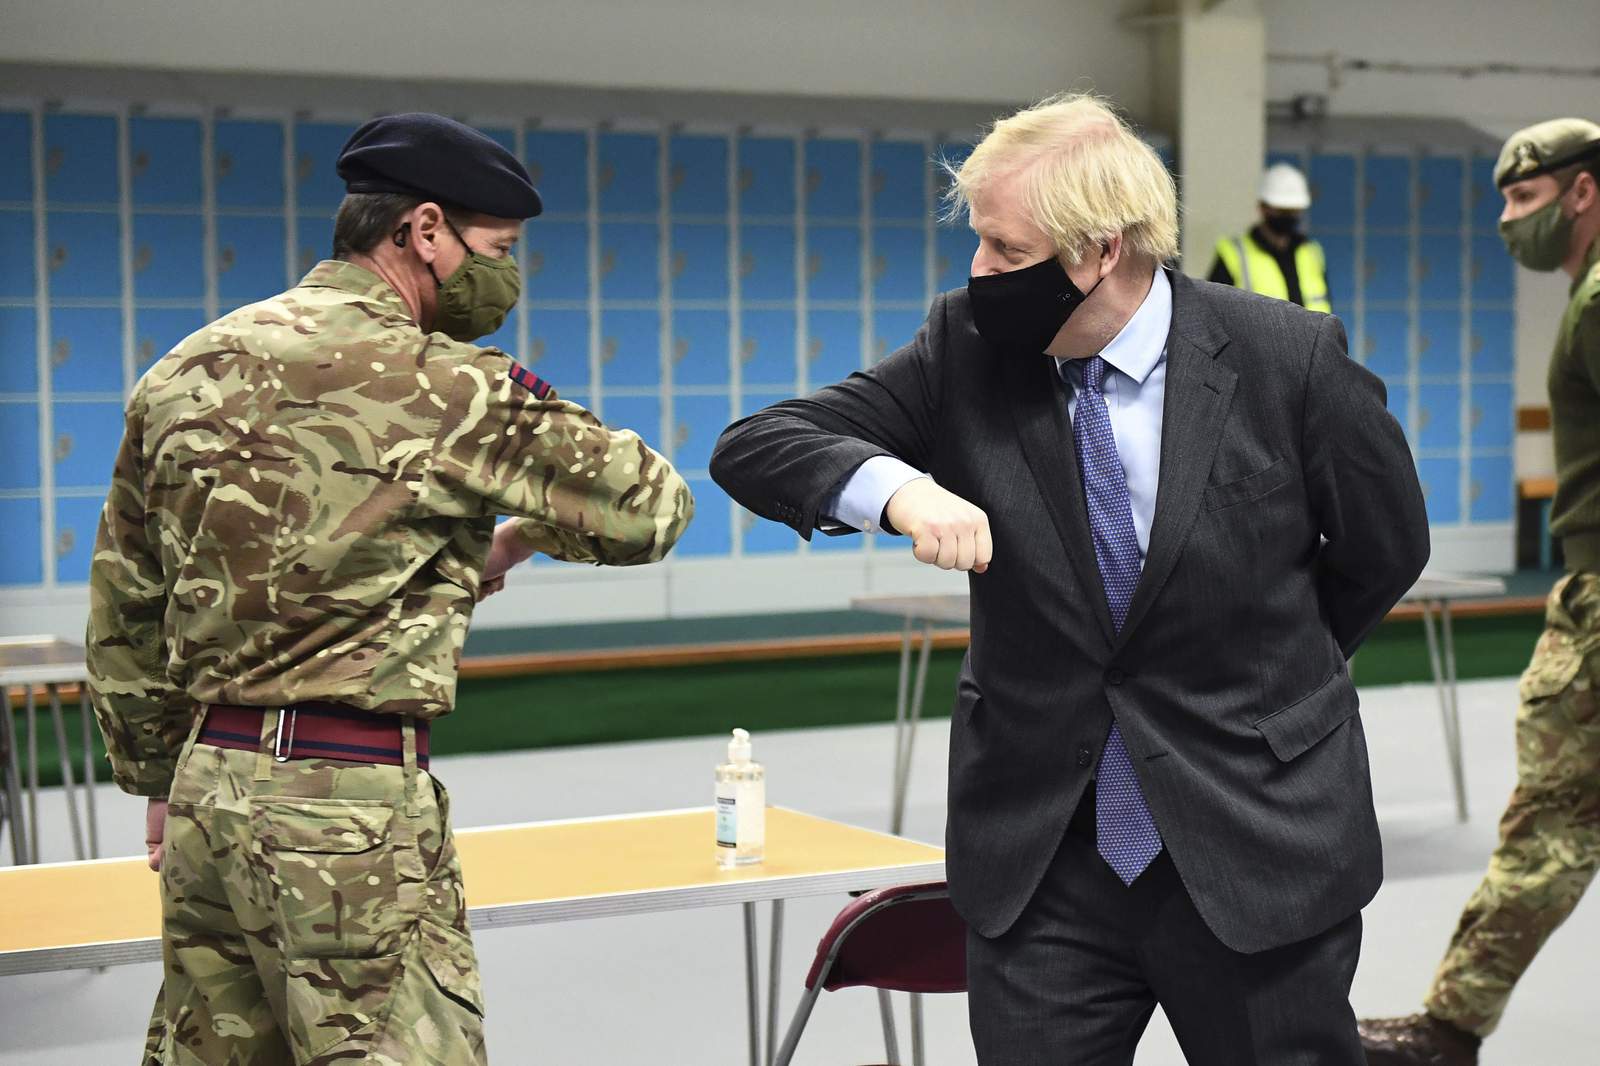 UK's Johnson faces criticism over Scotland trip in lockdown